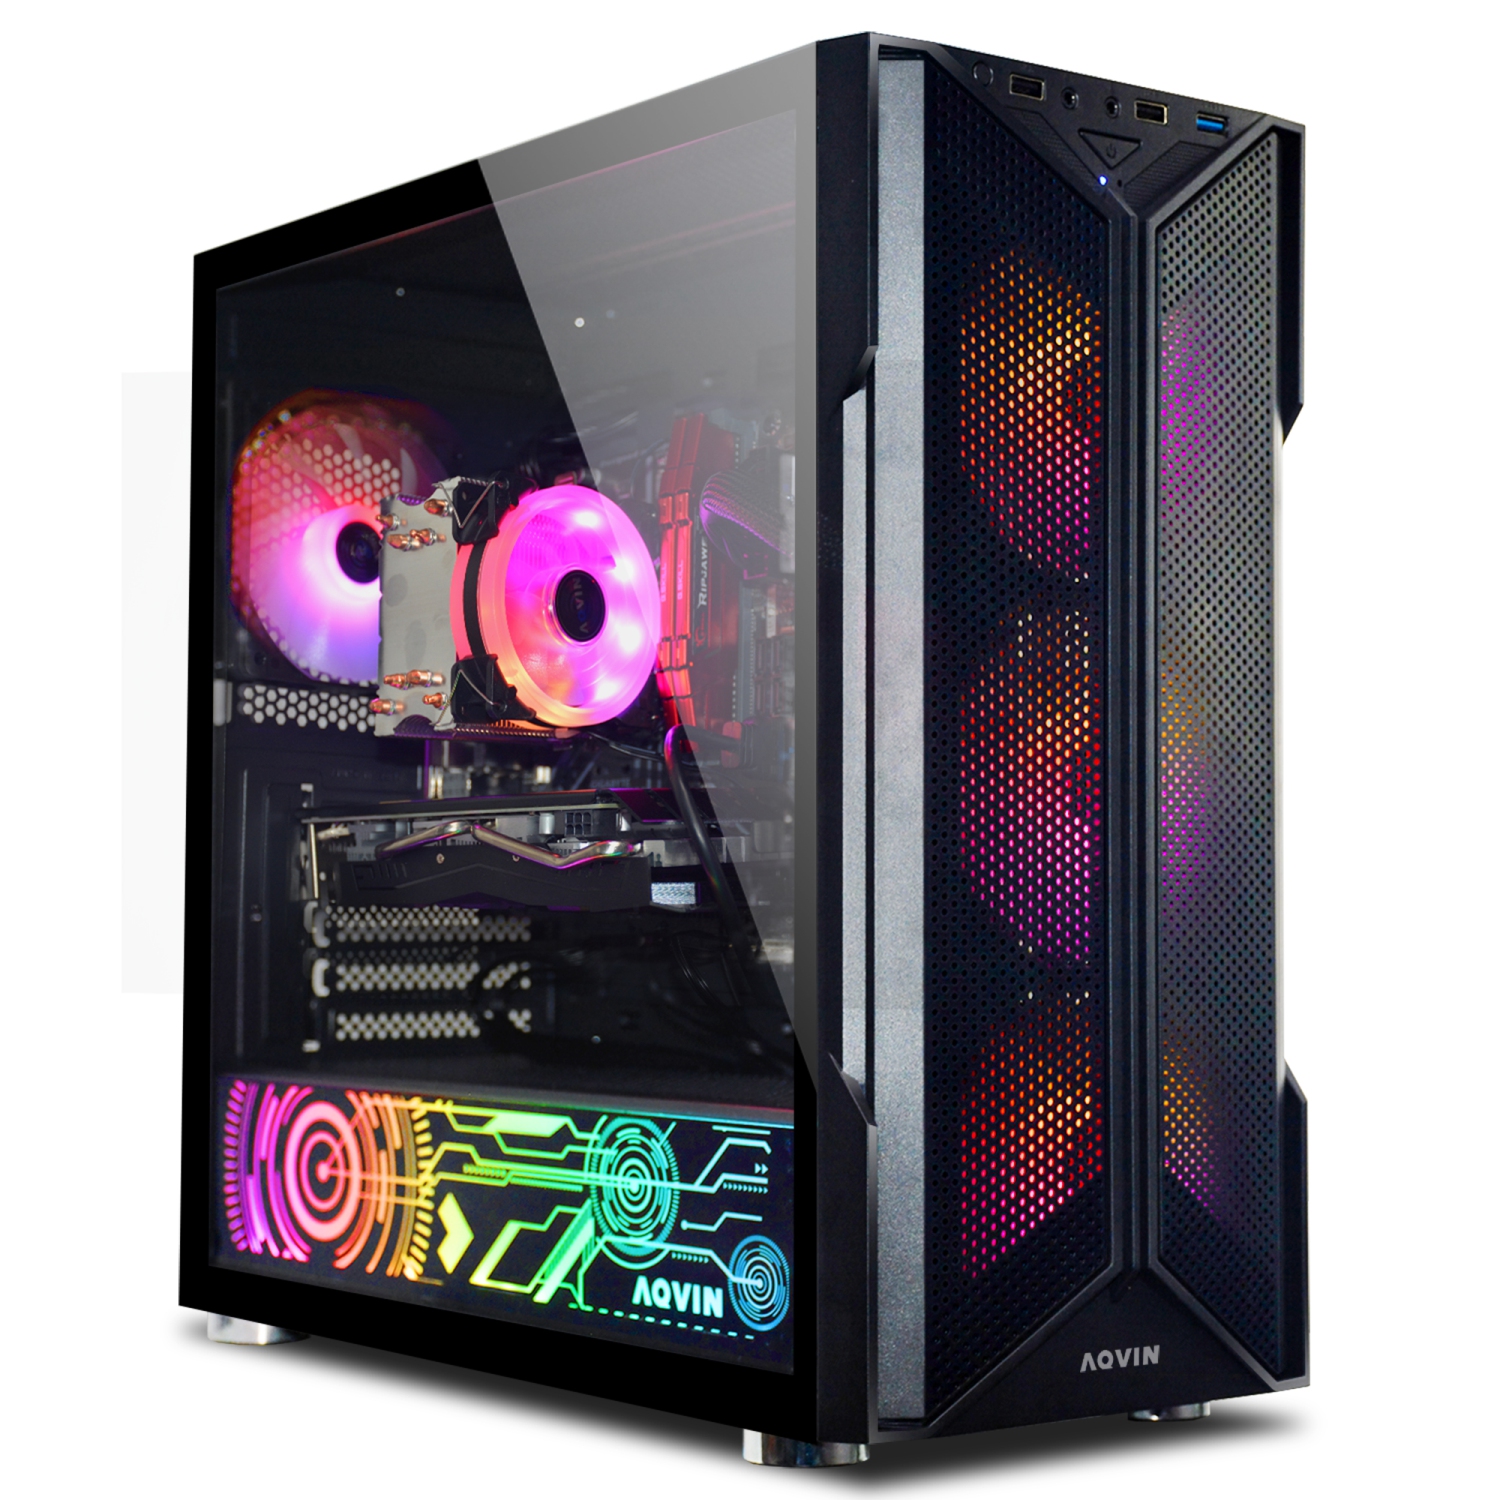 AQVIN-AQ20 Tower Desktop Computer Gaming PC - RGB (Intel Core i7/ 32GB RAM/ 2TB SSD/ GeForce GTX 1660 Super 6GB/ Windows 10 Pro) - Only at Best Buy